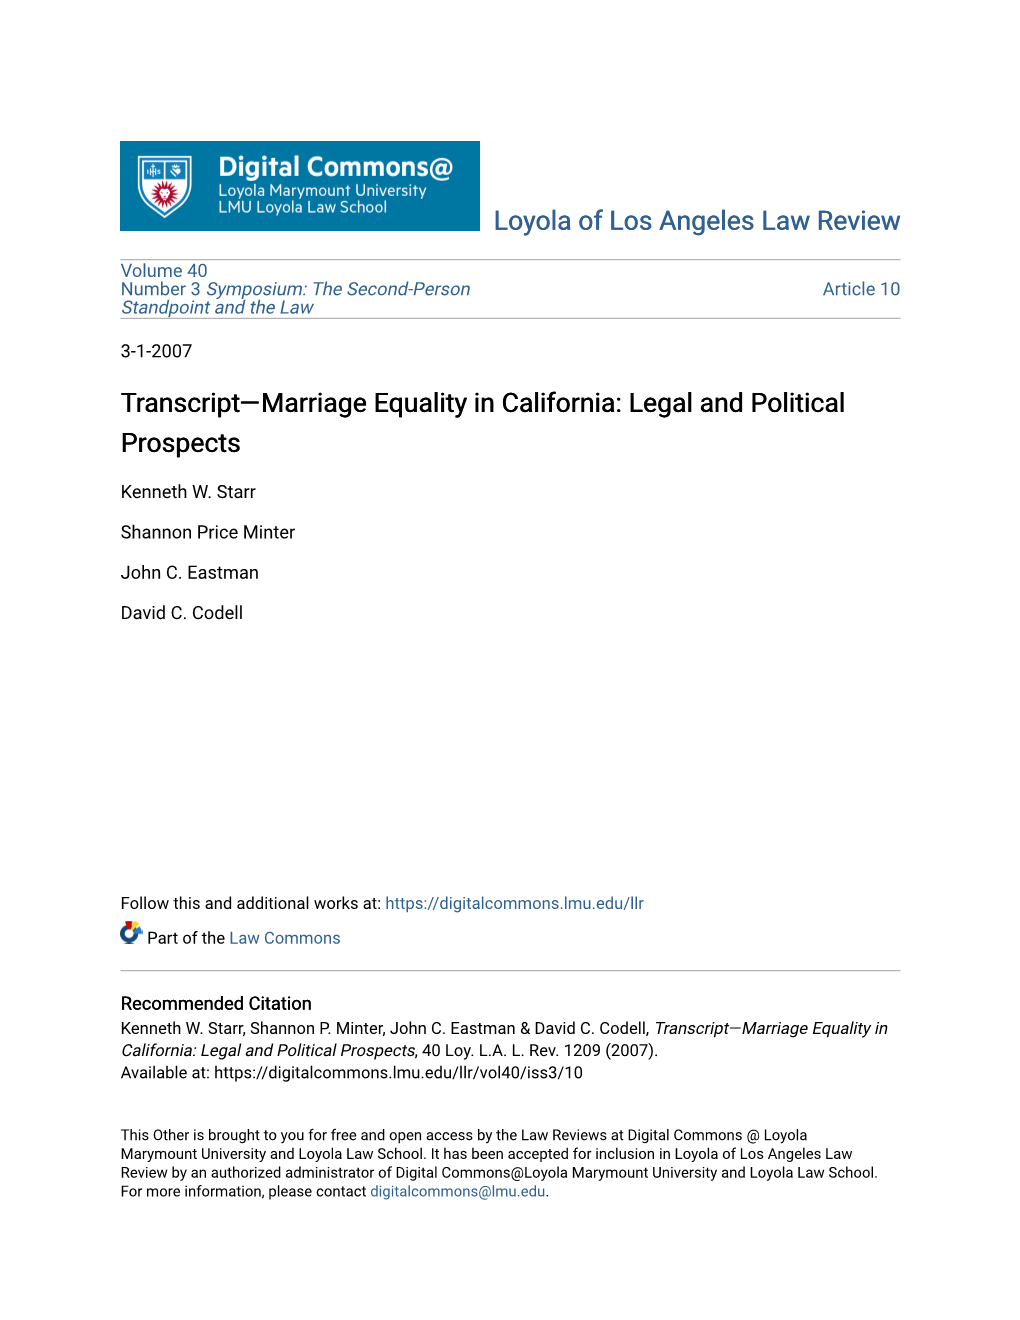 Transcriptâ•Flmarriage Equality in California